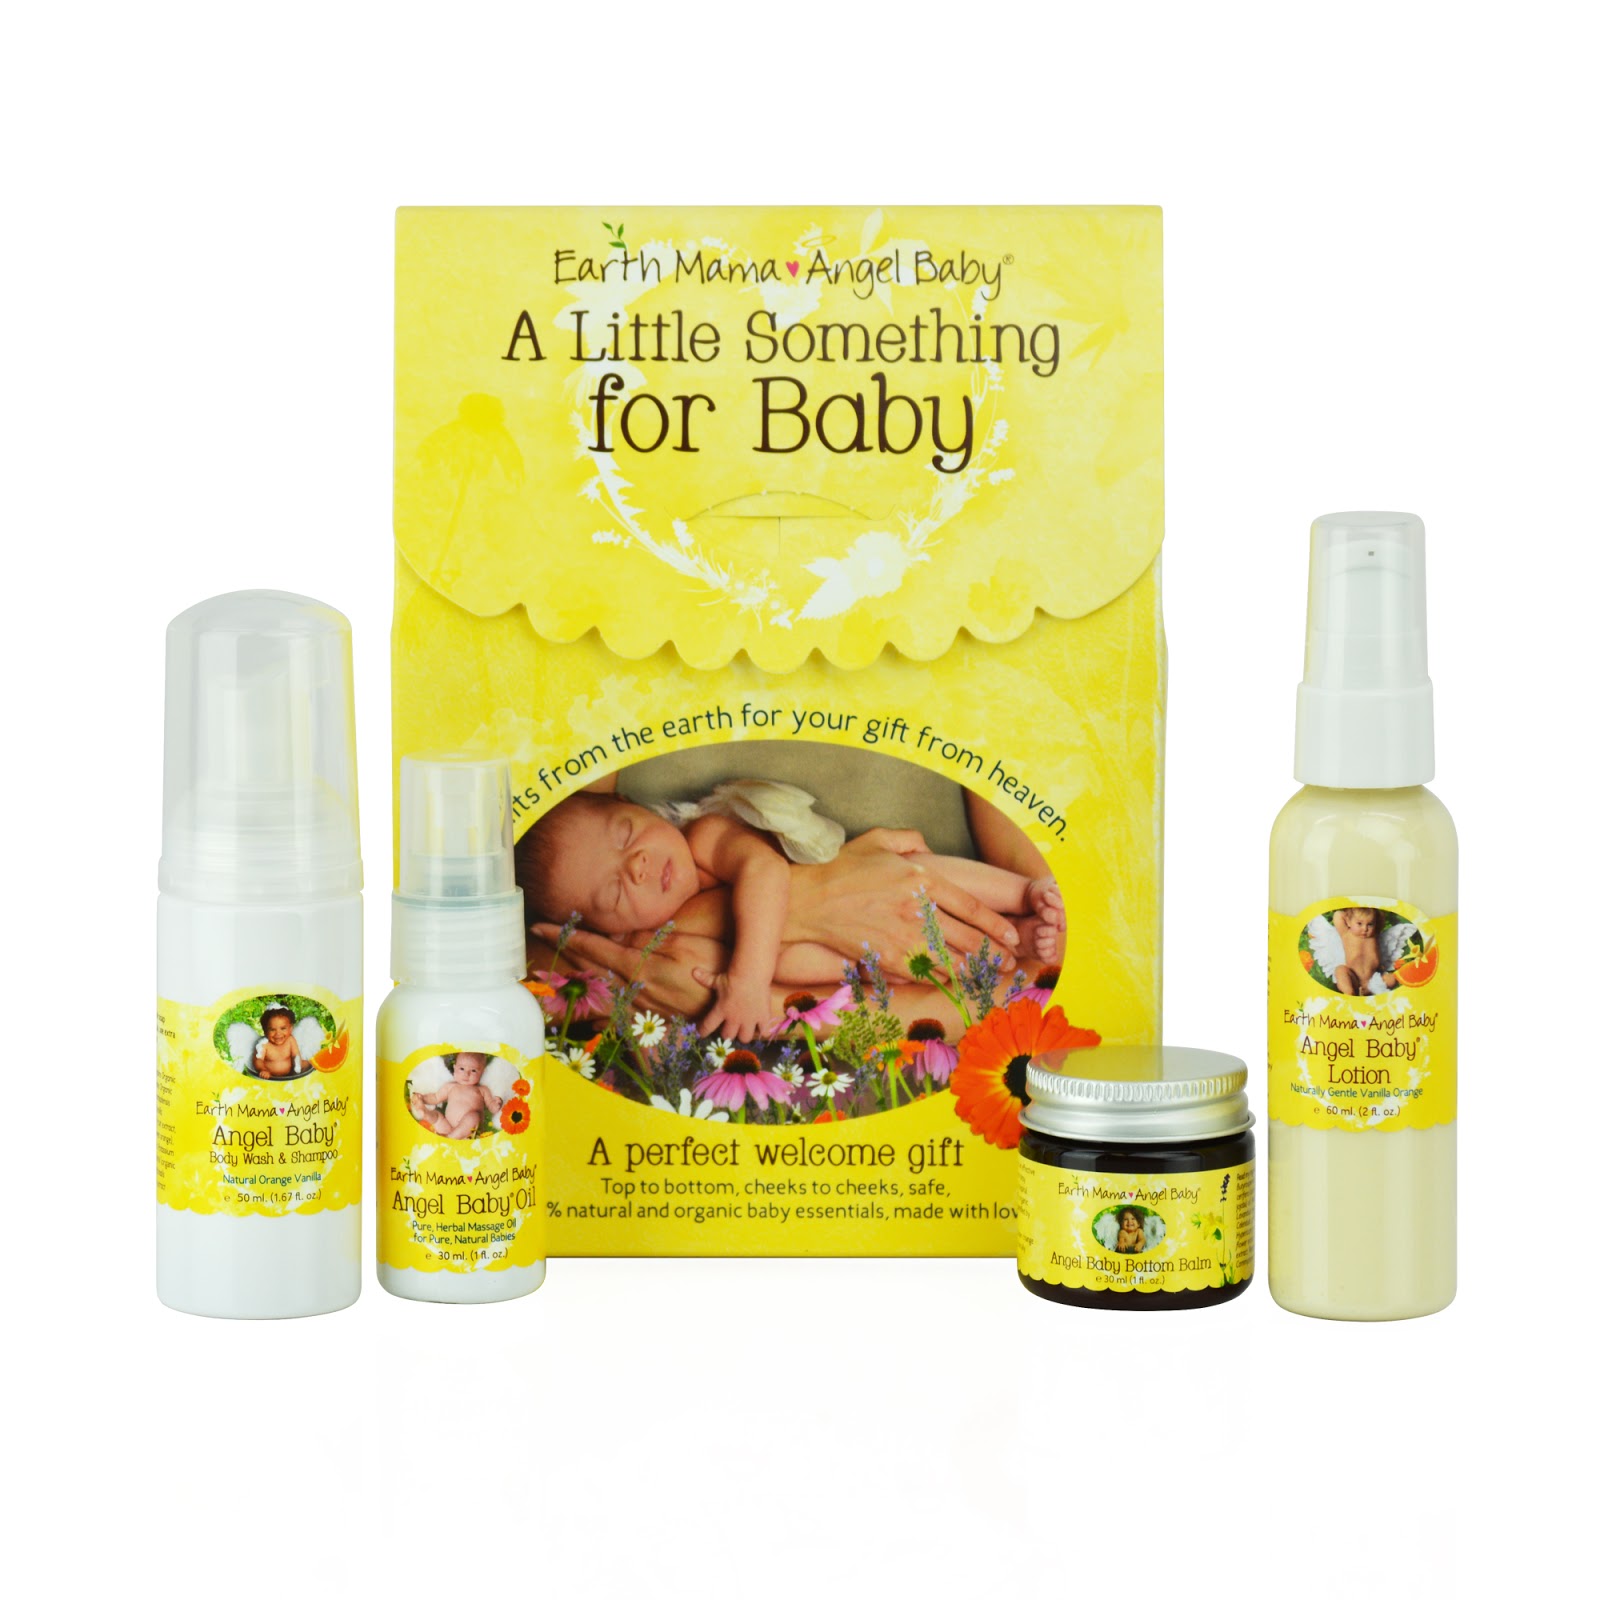 Earth Mama Angel Baby: Breastfeeding Baby Booby Tubes, 1 Pair